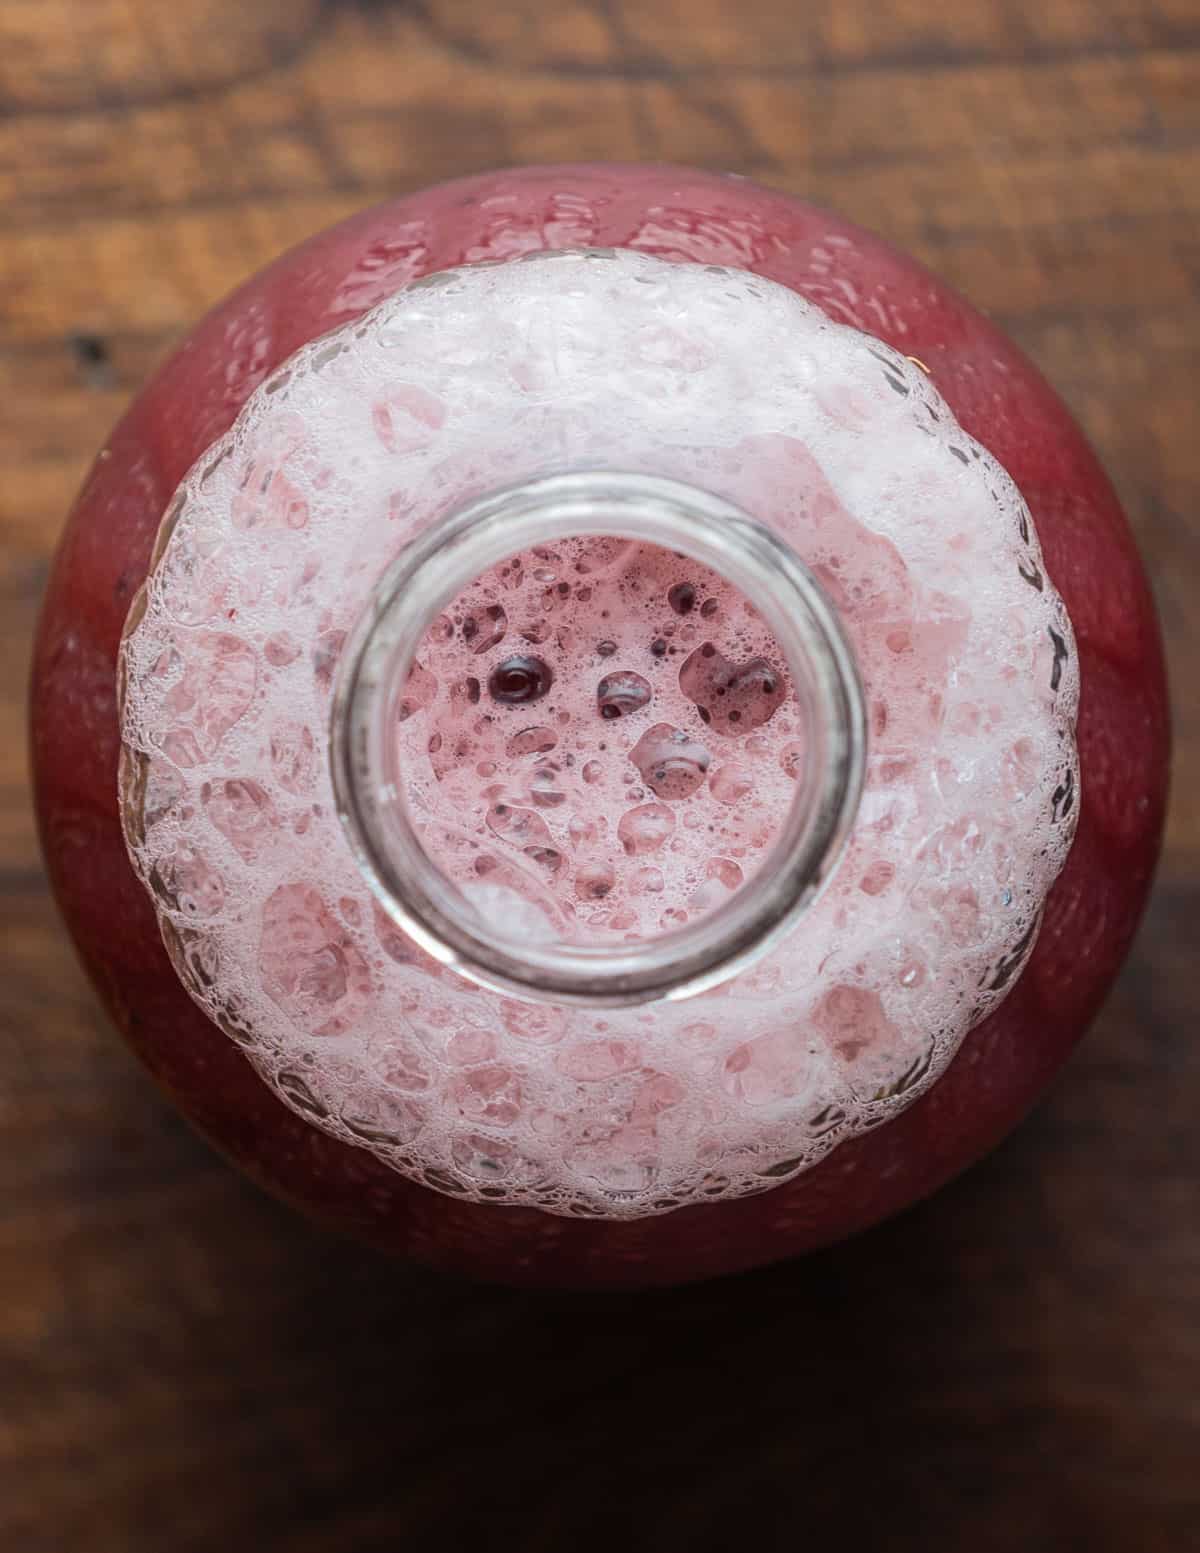 A close up image of a jar of chokeberry juice. 